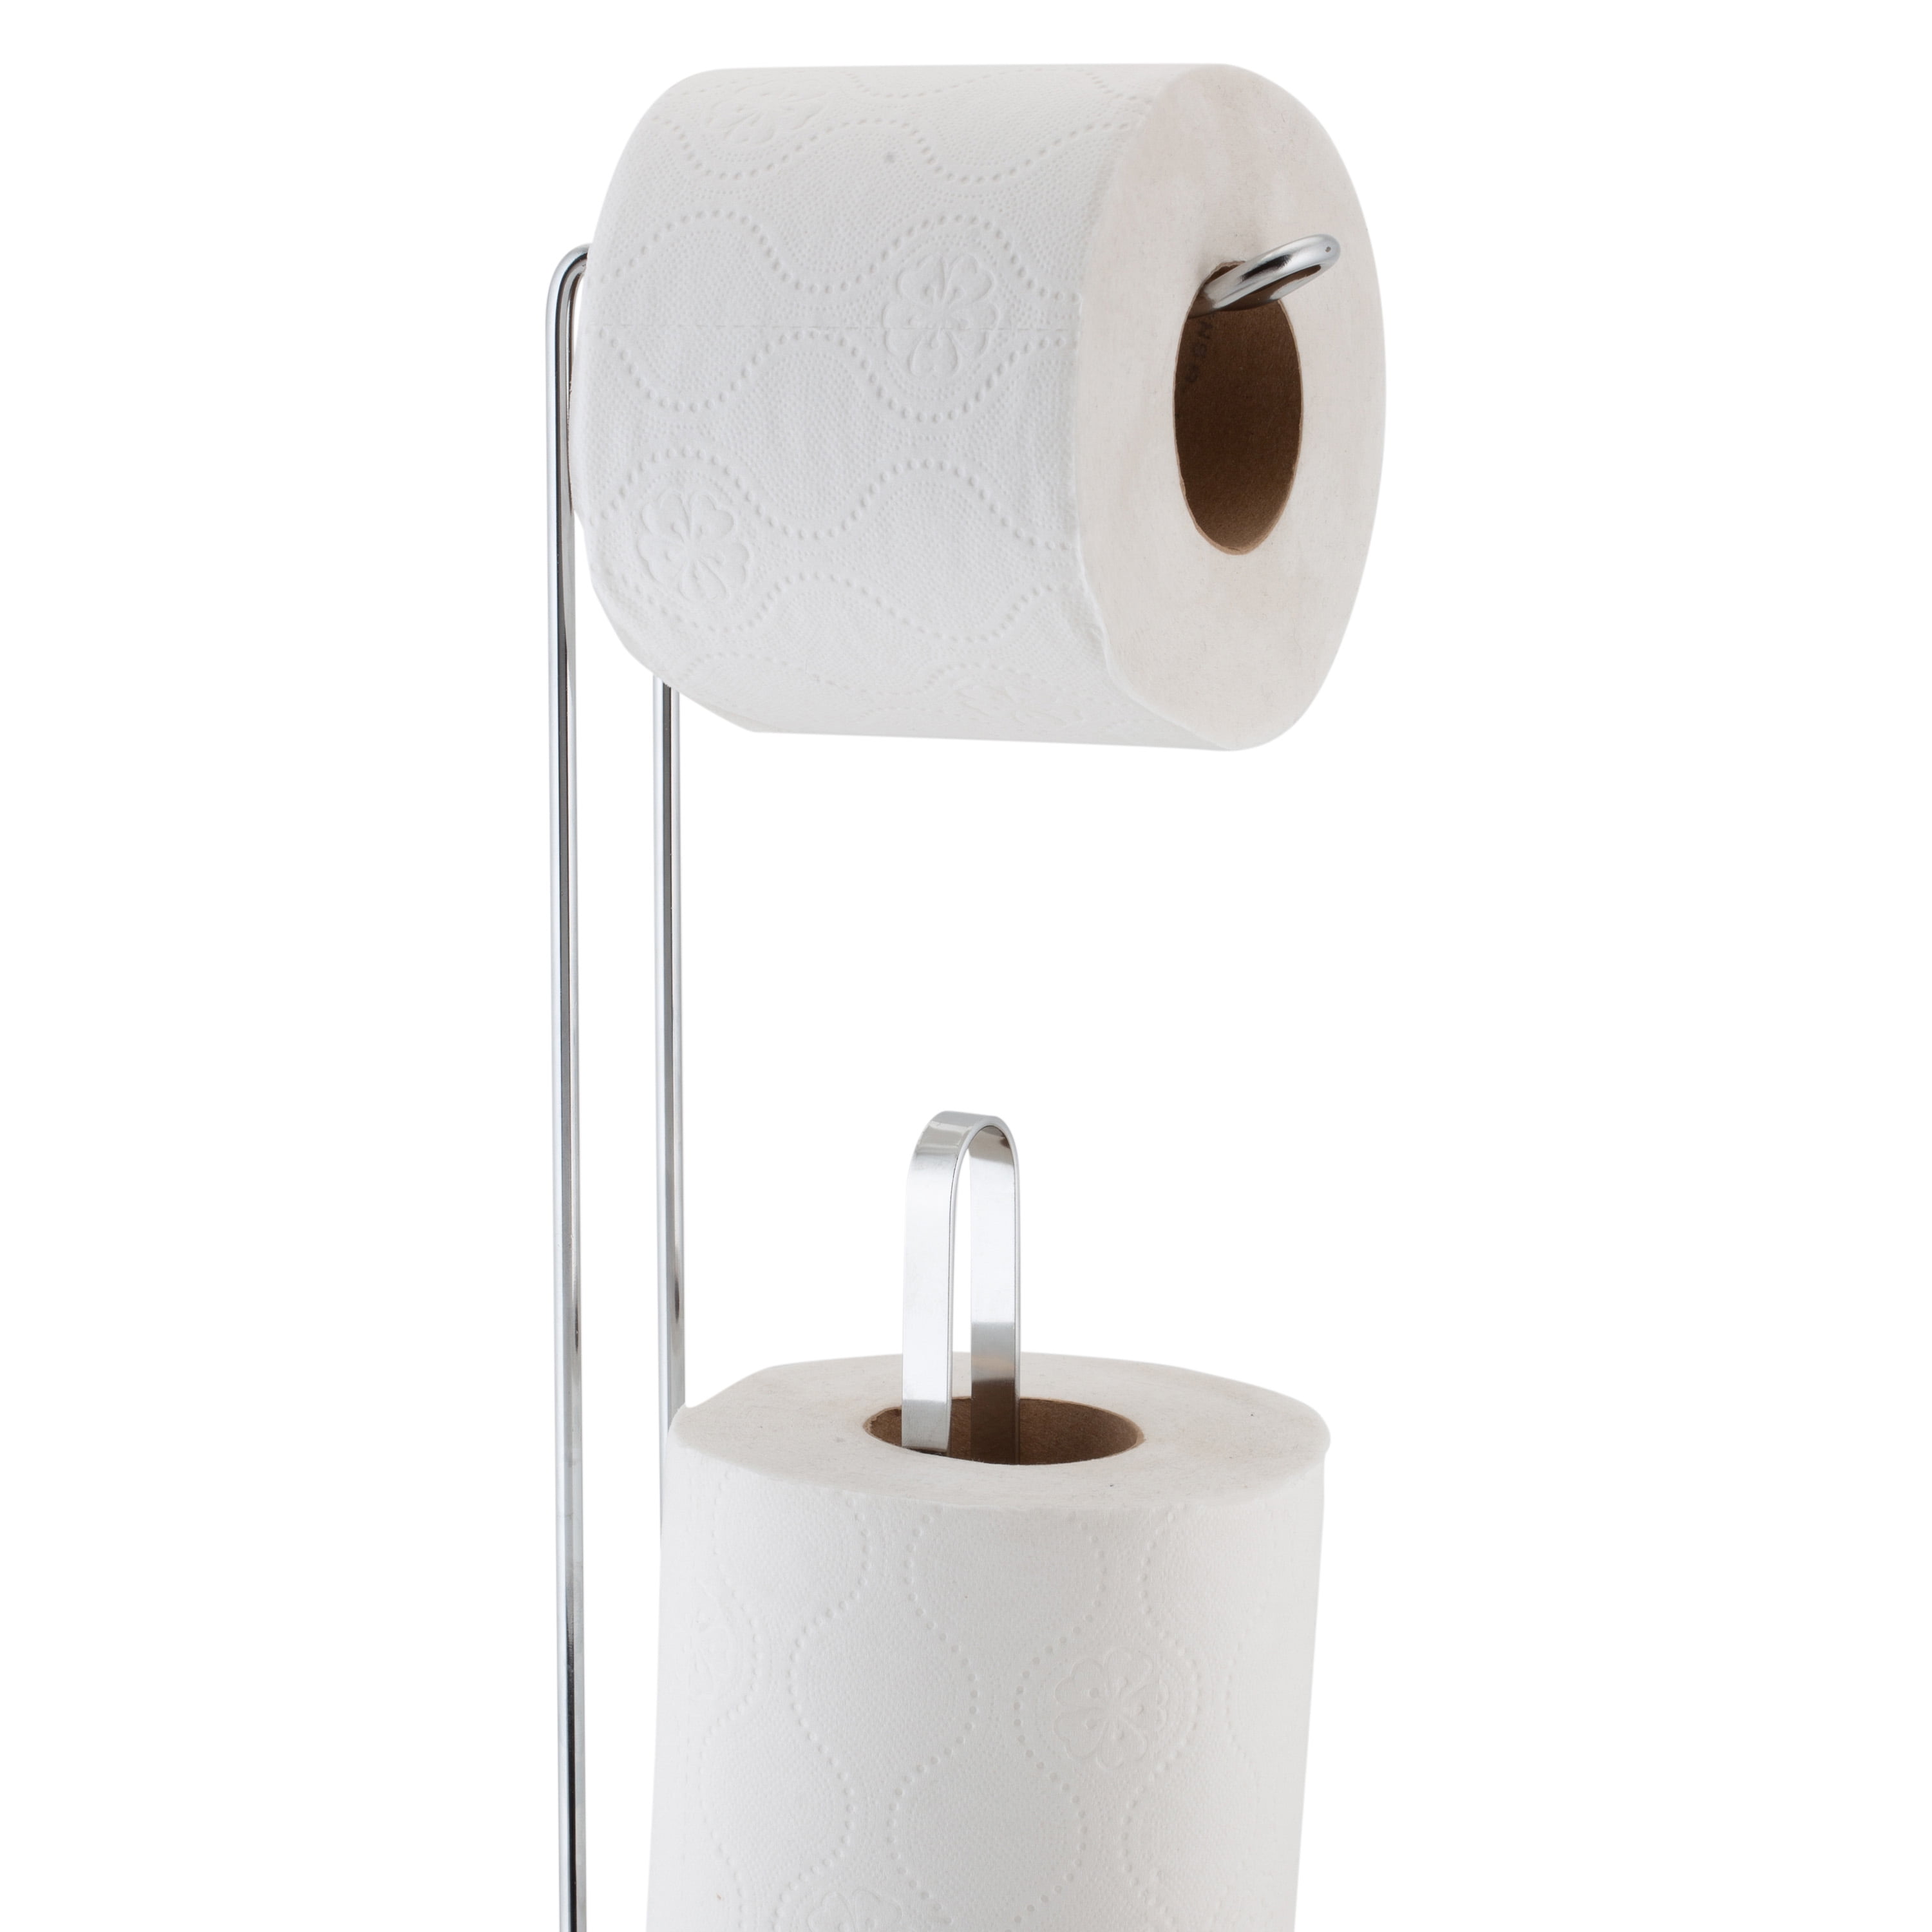 Passetas SWZB0957LWVZ1 Freestanding Toilet Paper Holder